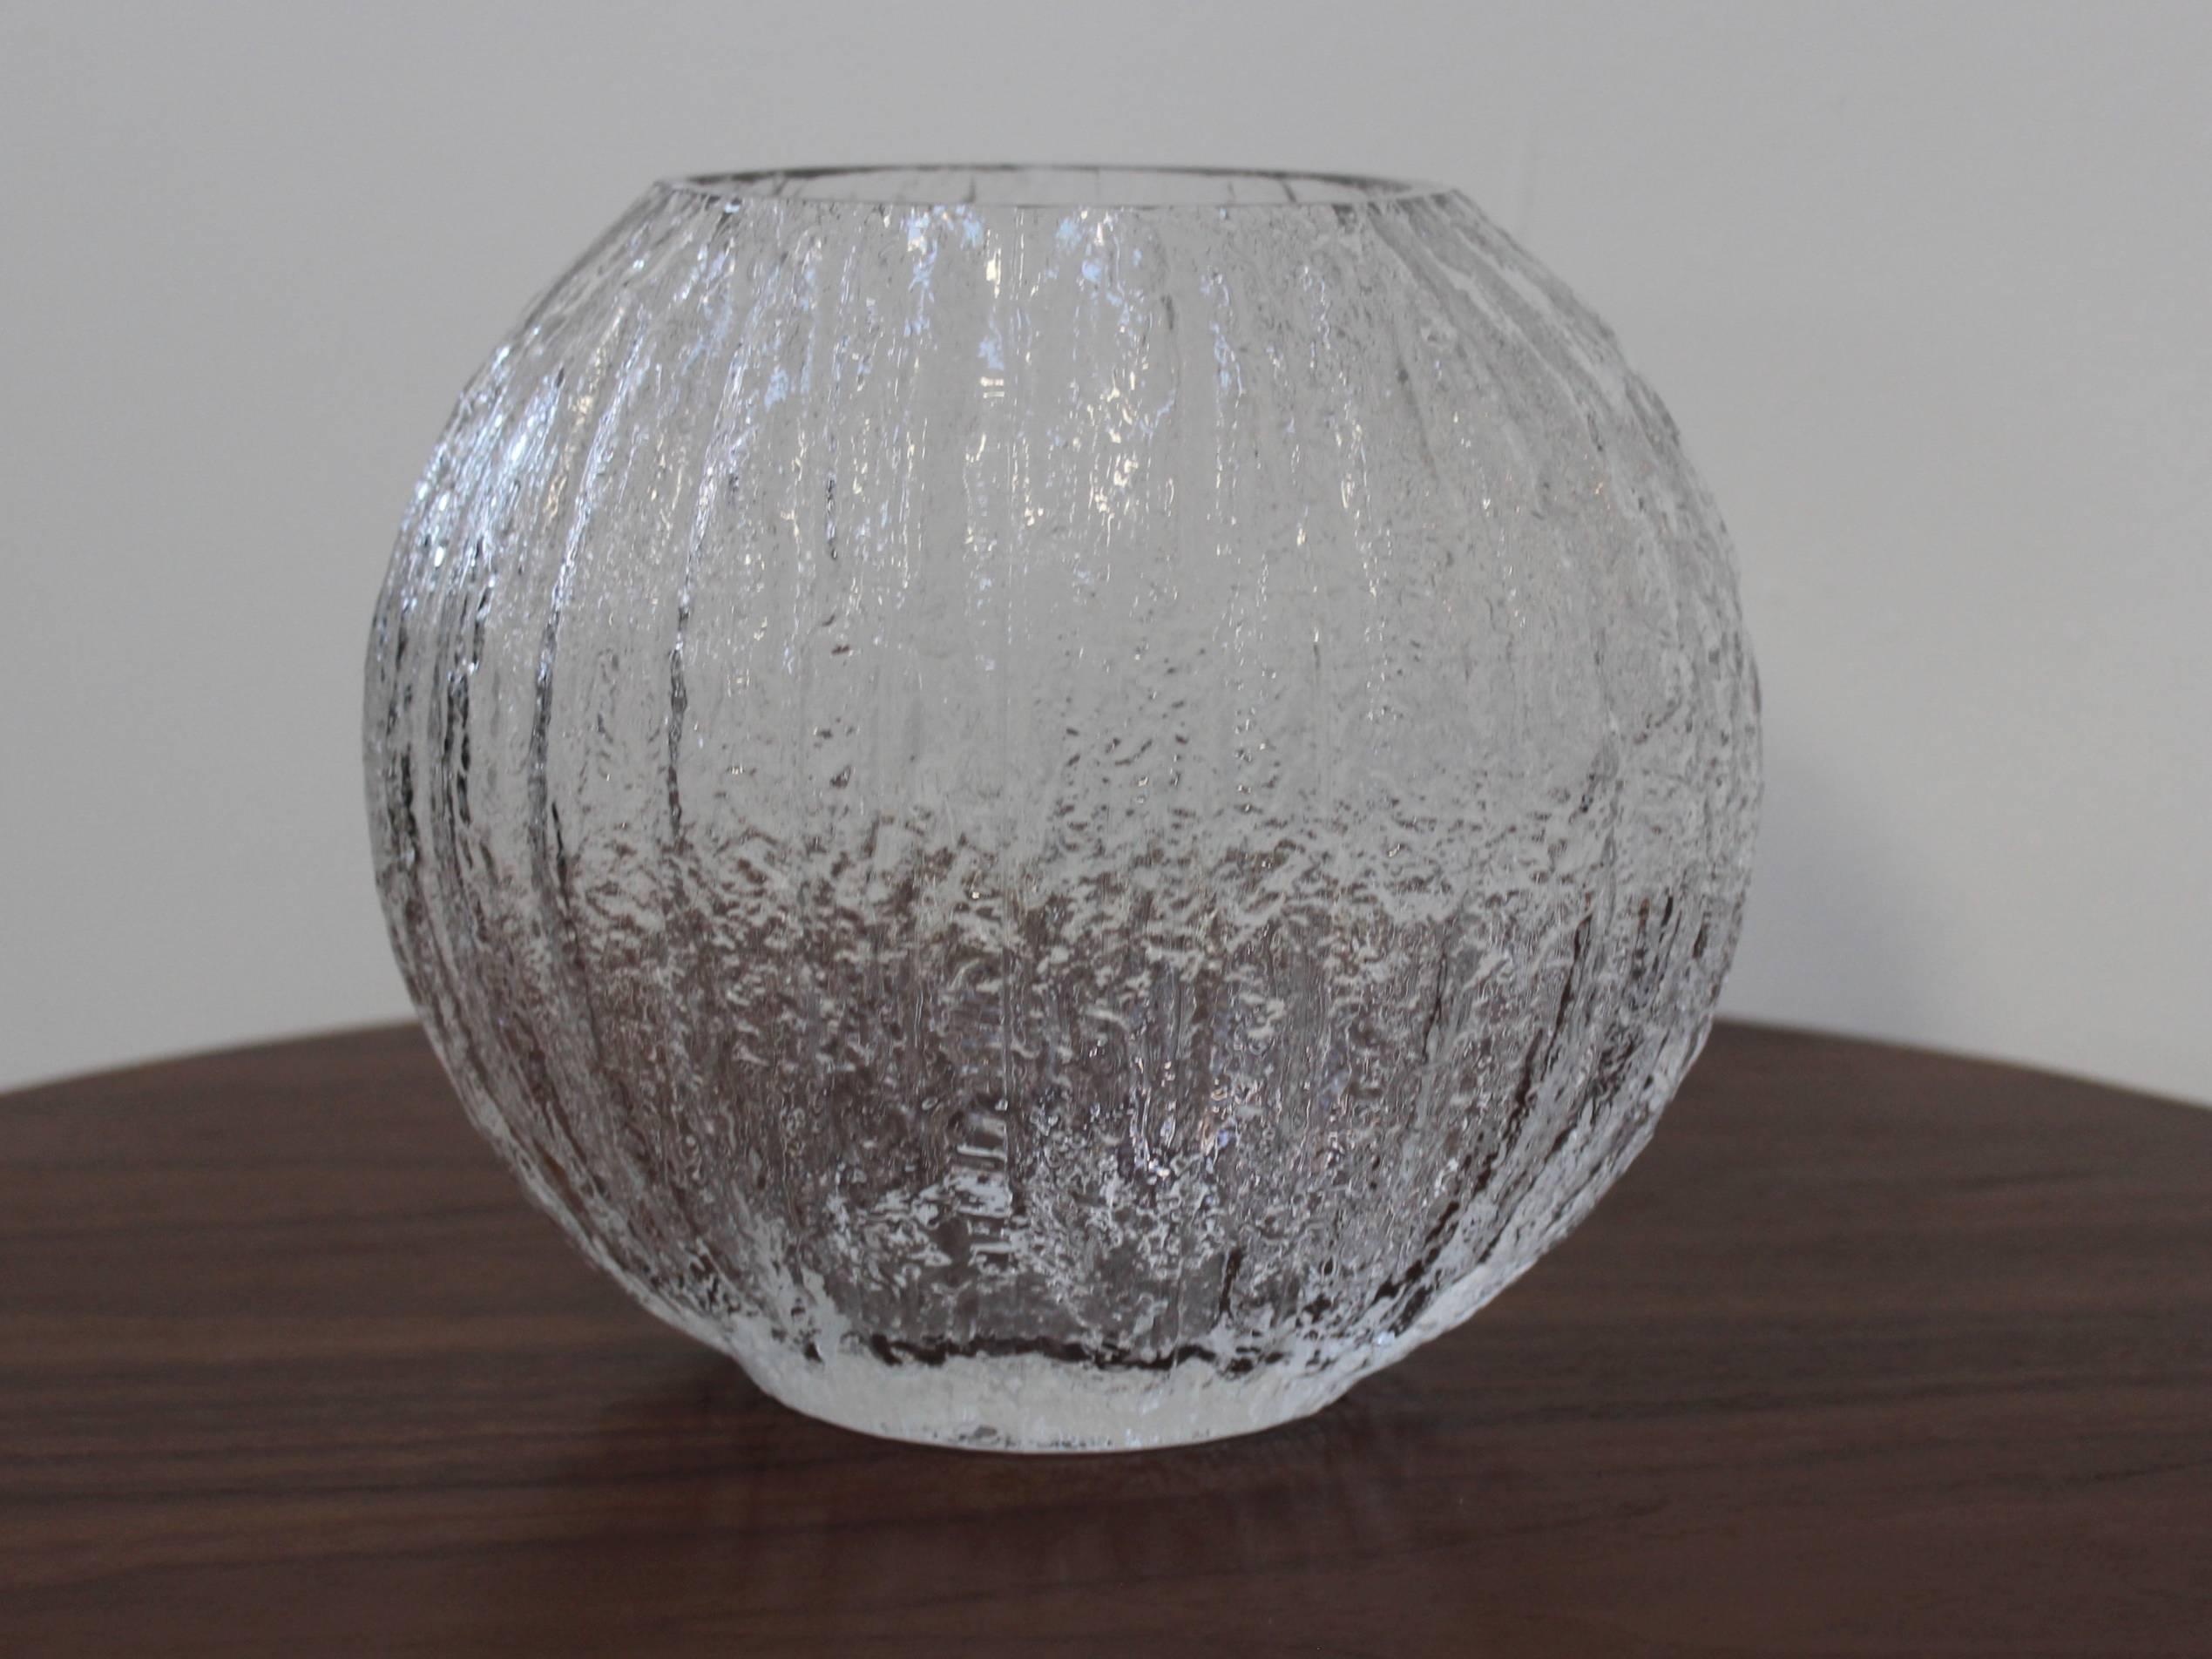 196s Timo Sarpaneva for Iitala finland glass vase 